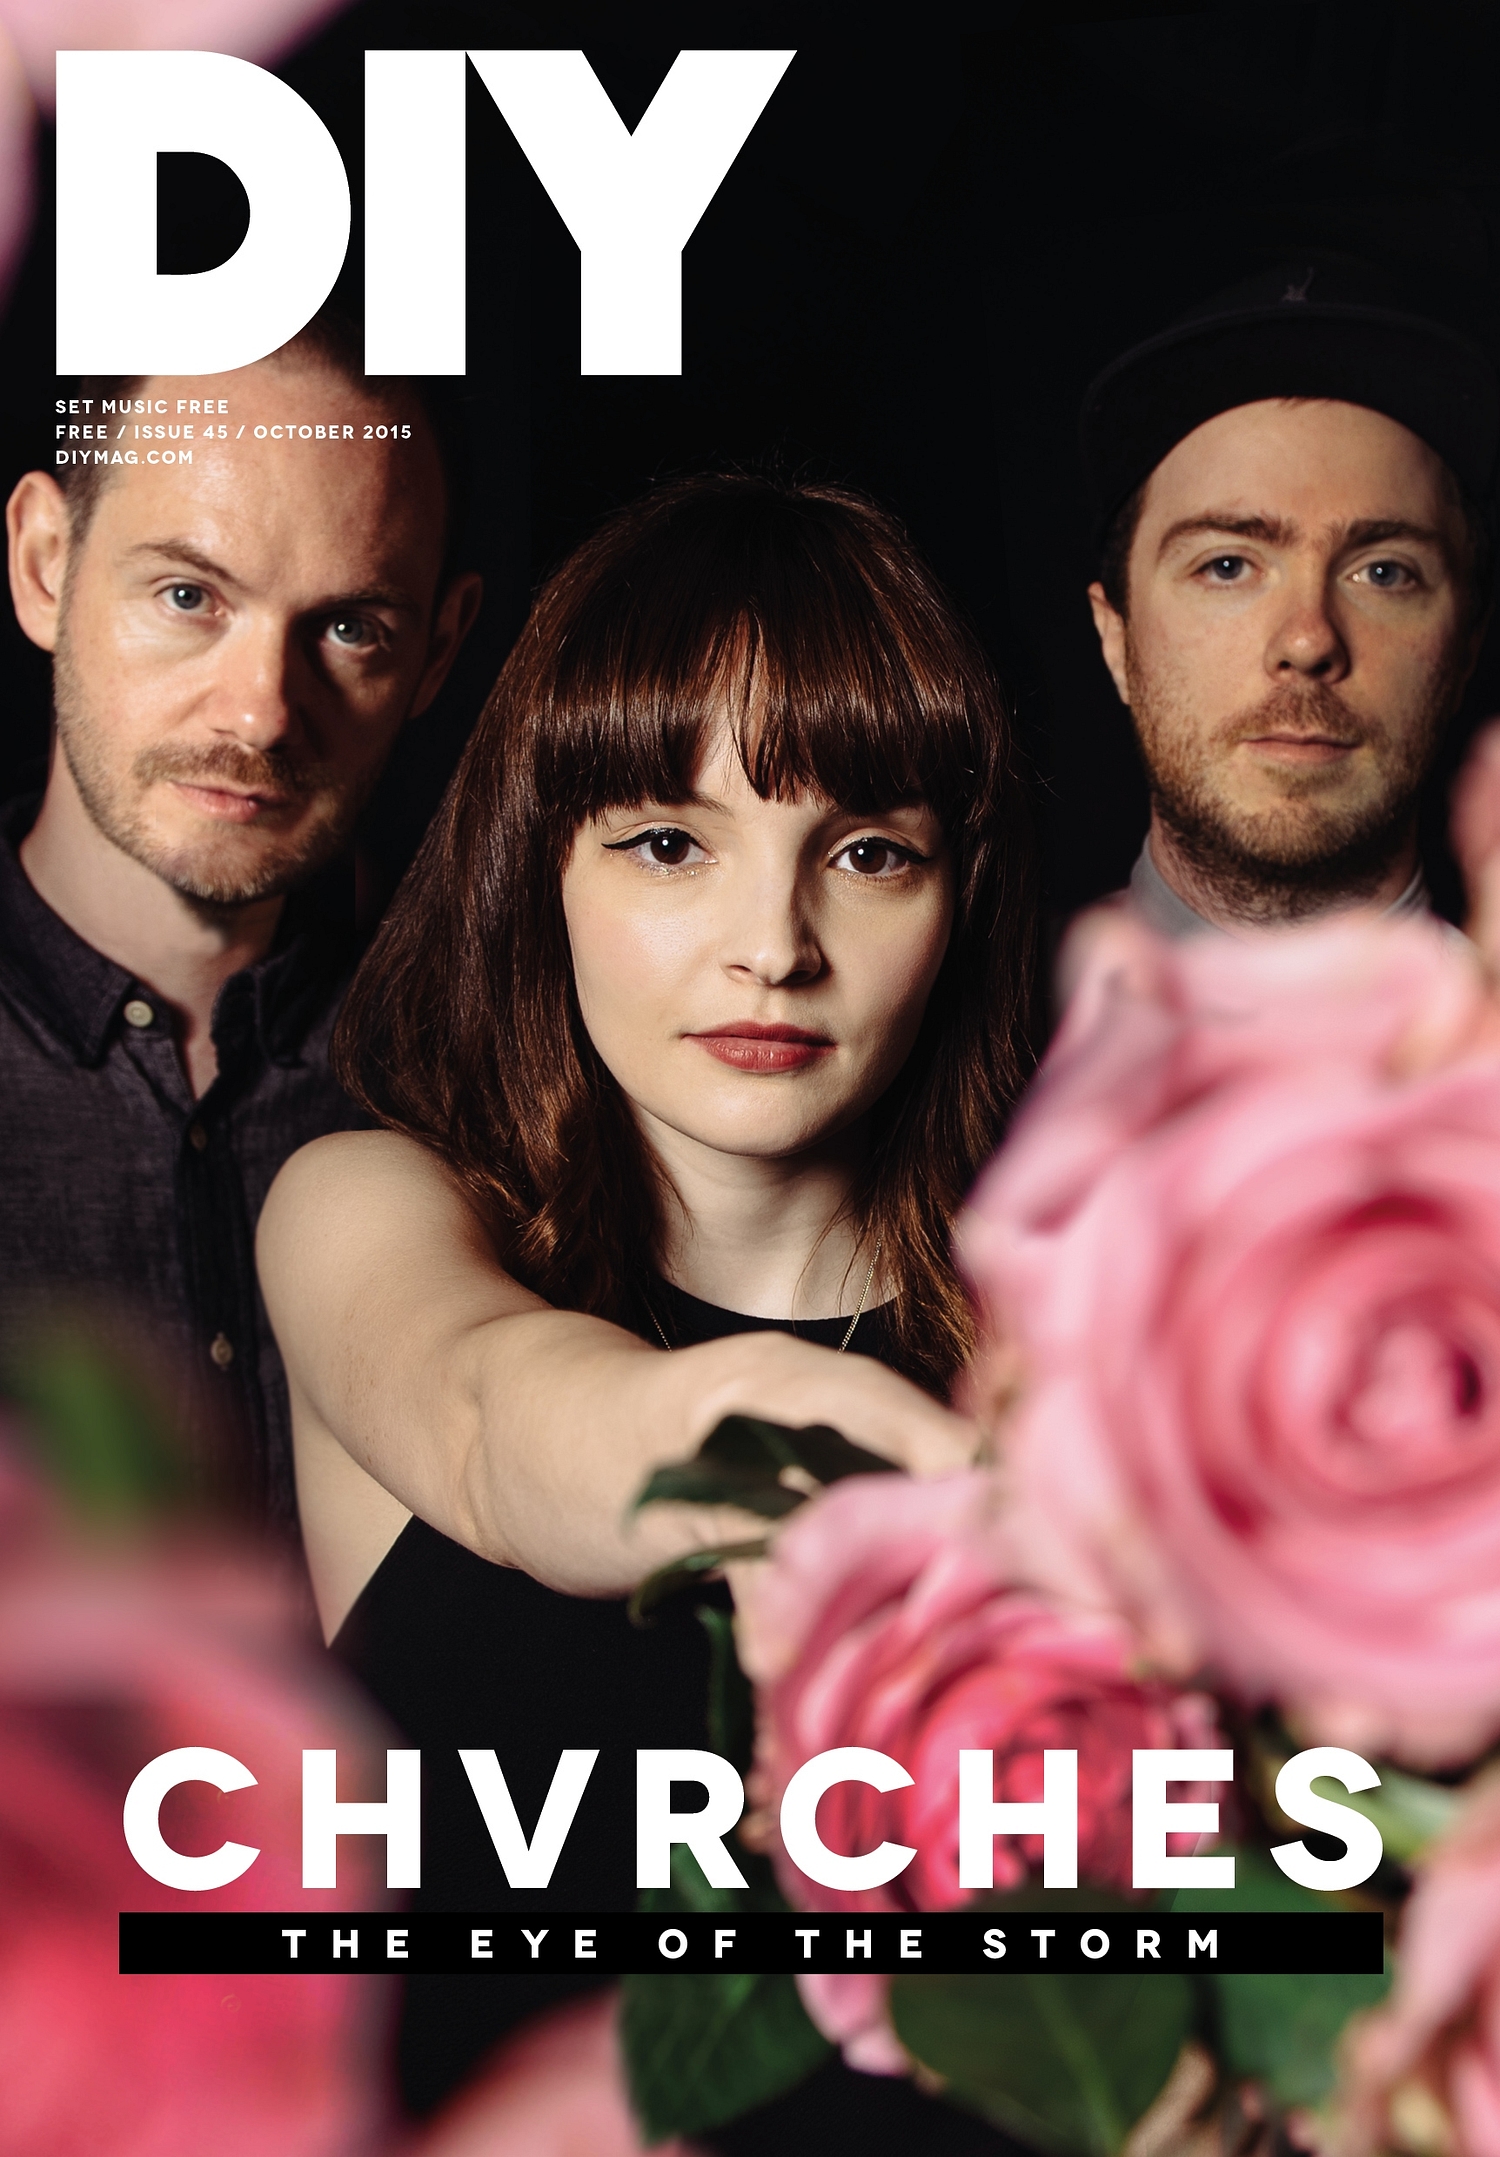 Chvrches: DIY's October 2015 cover stars revealed!